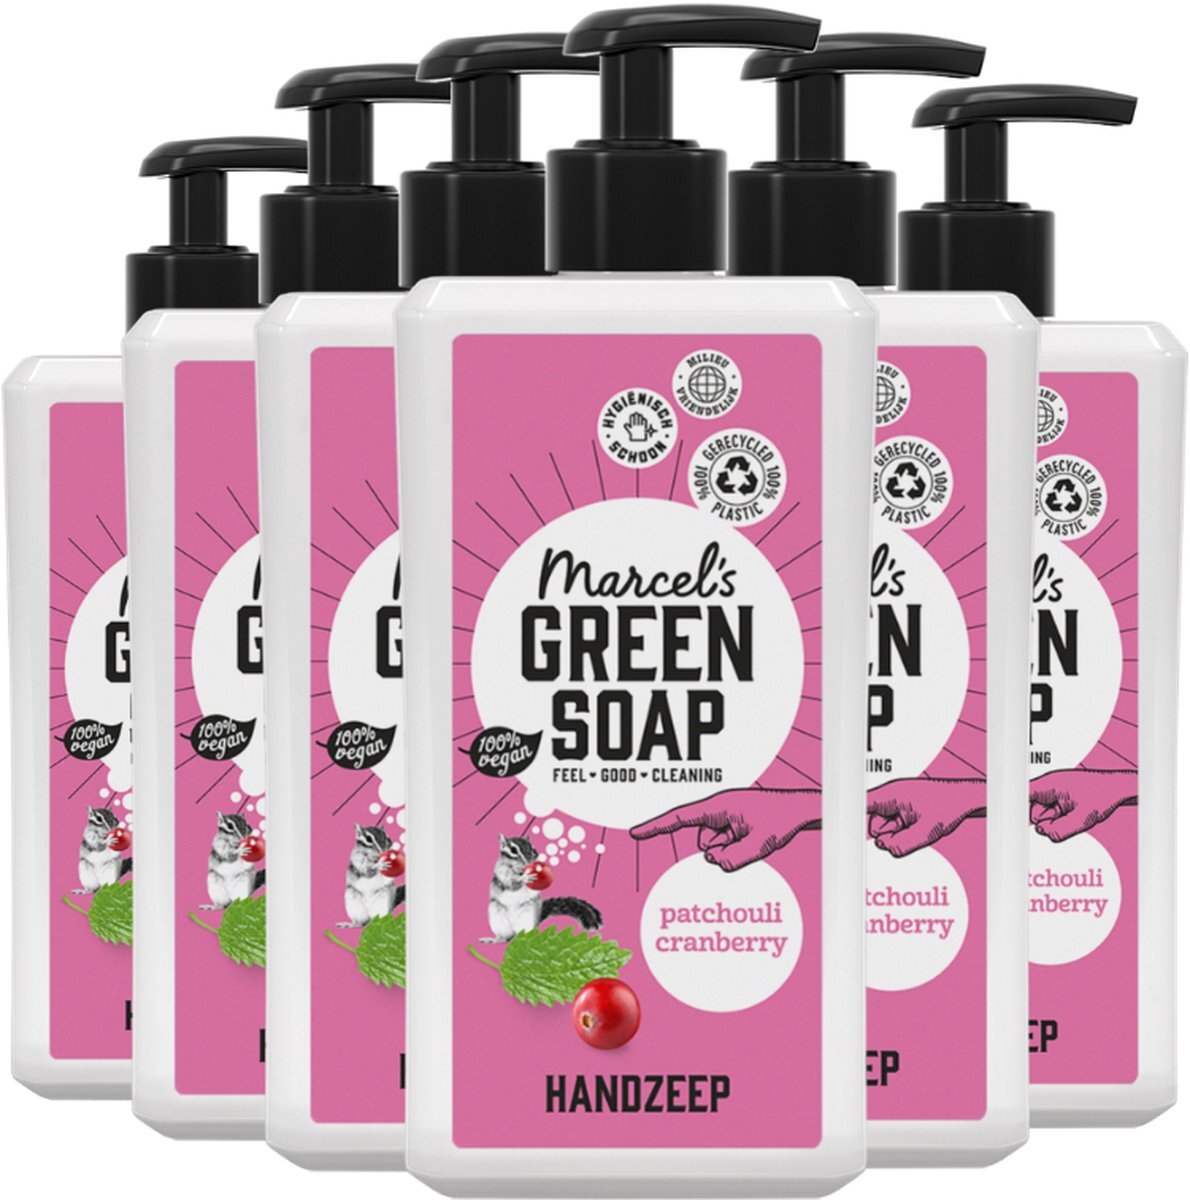 Marcels Green Soap Handzeep Patchouli & Cranberry - 6 x 500 ml